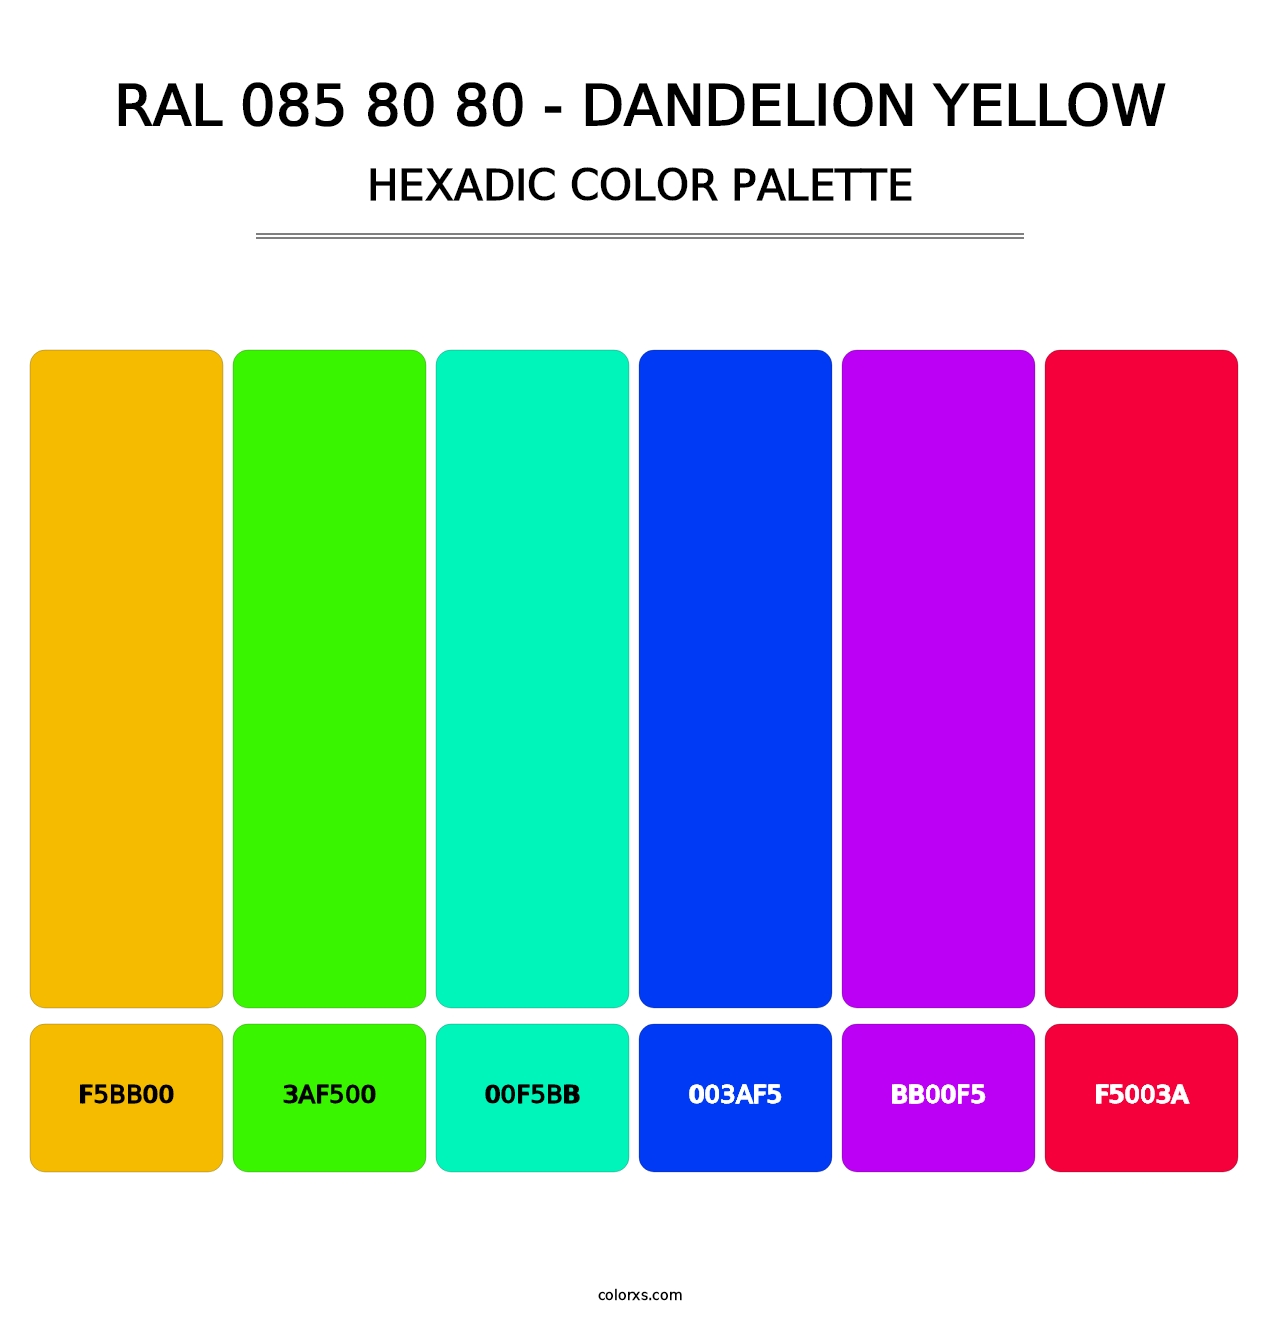 RAL 085 80 80 - Dandelion Yellow - Hexadic Color Palette